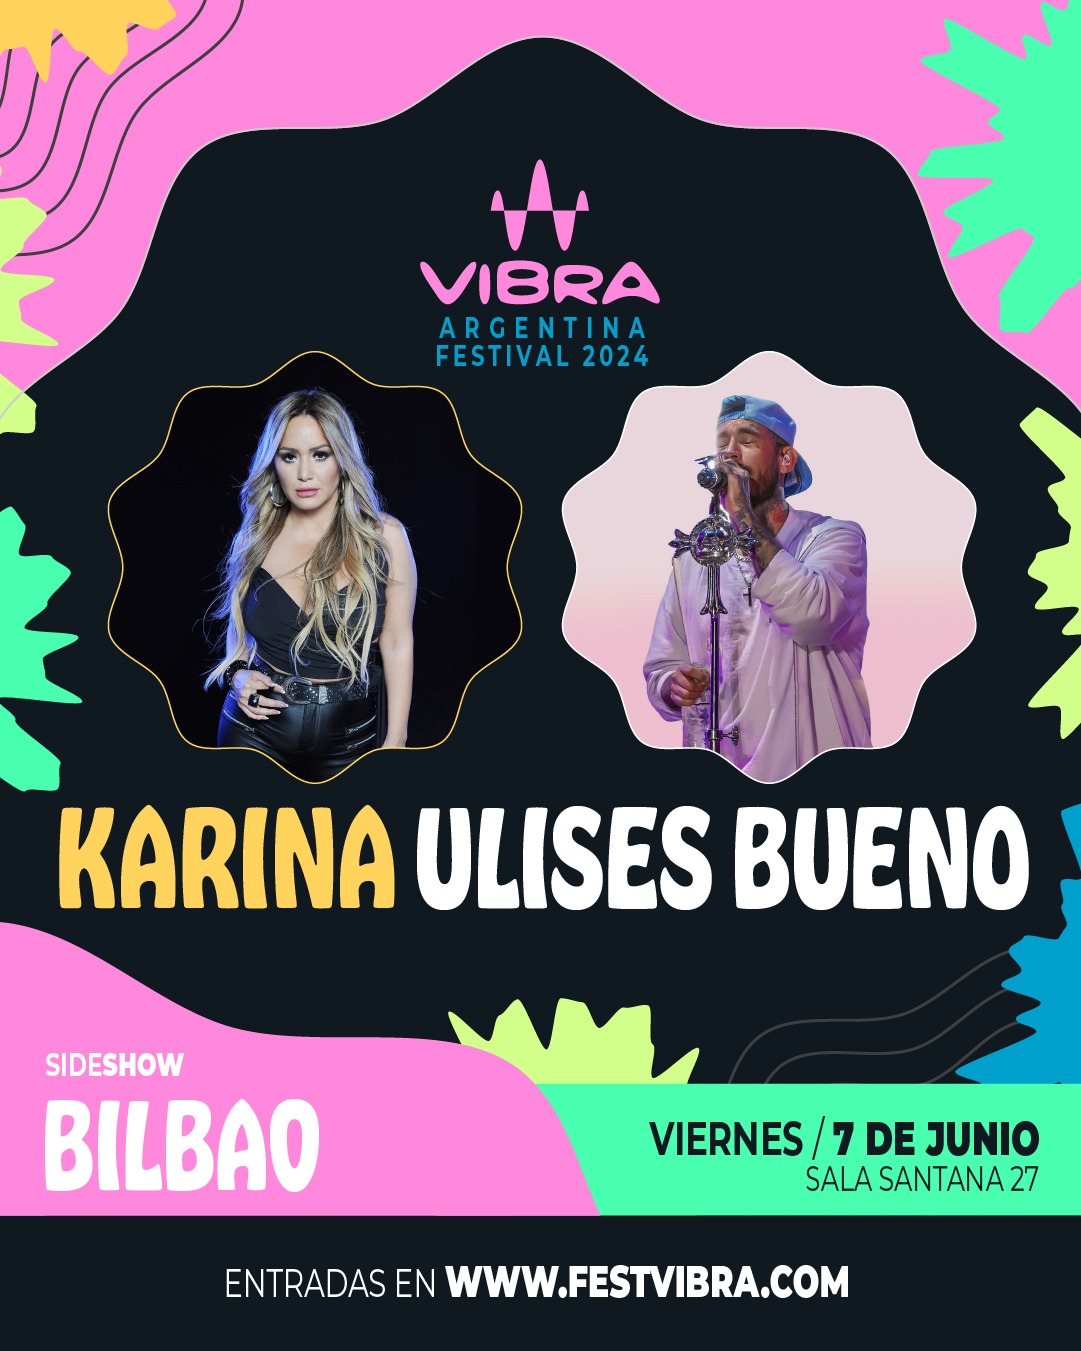 VIBRA ARGENTINA FESTIVAL 2024 en BILBAO, sala Santana 27, Viernes 7 Junio Karina y Ulises Bueno. Entradas y Info: www.festvibra.com